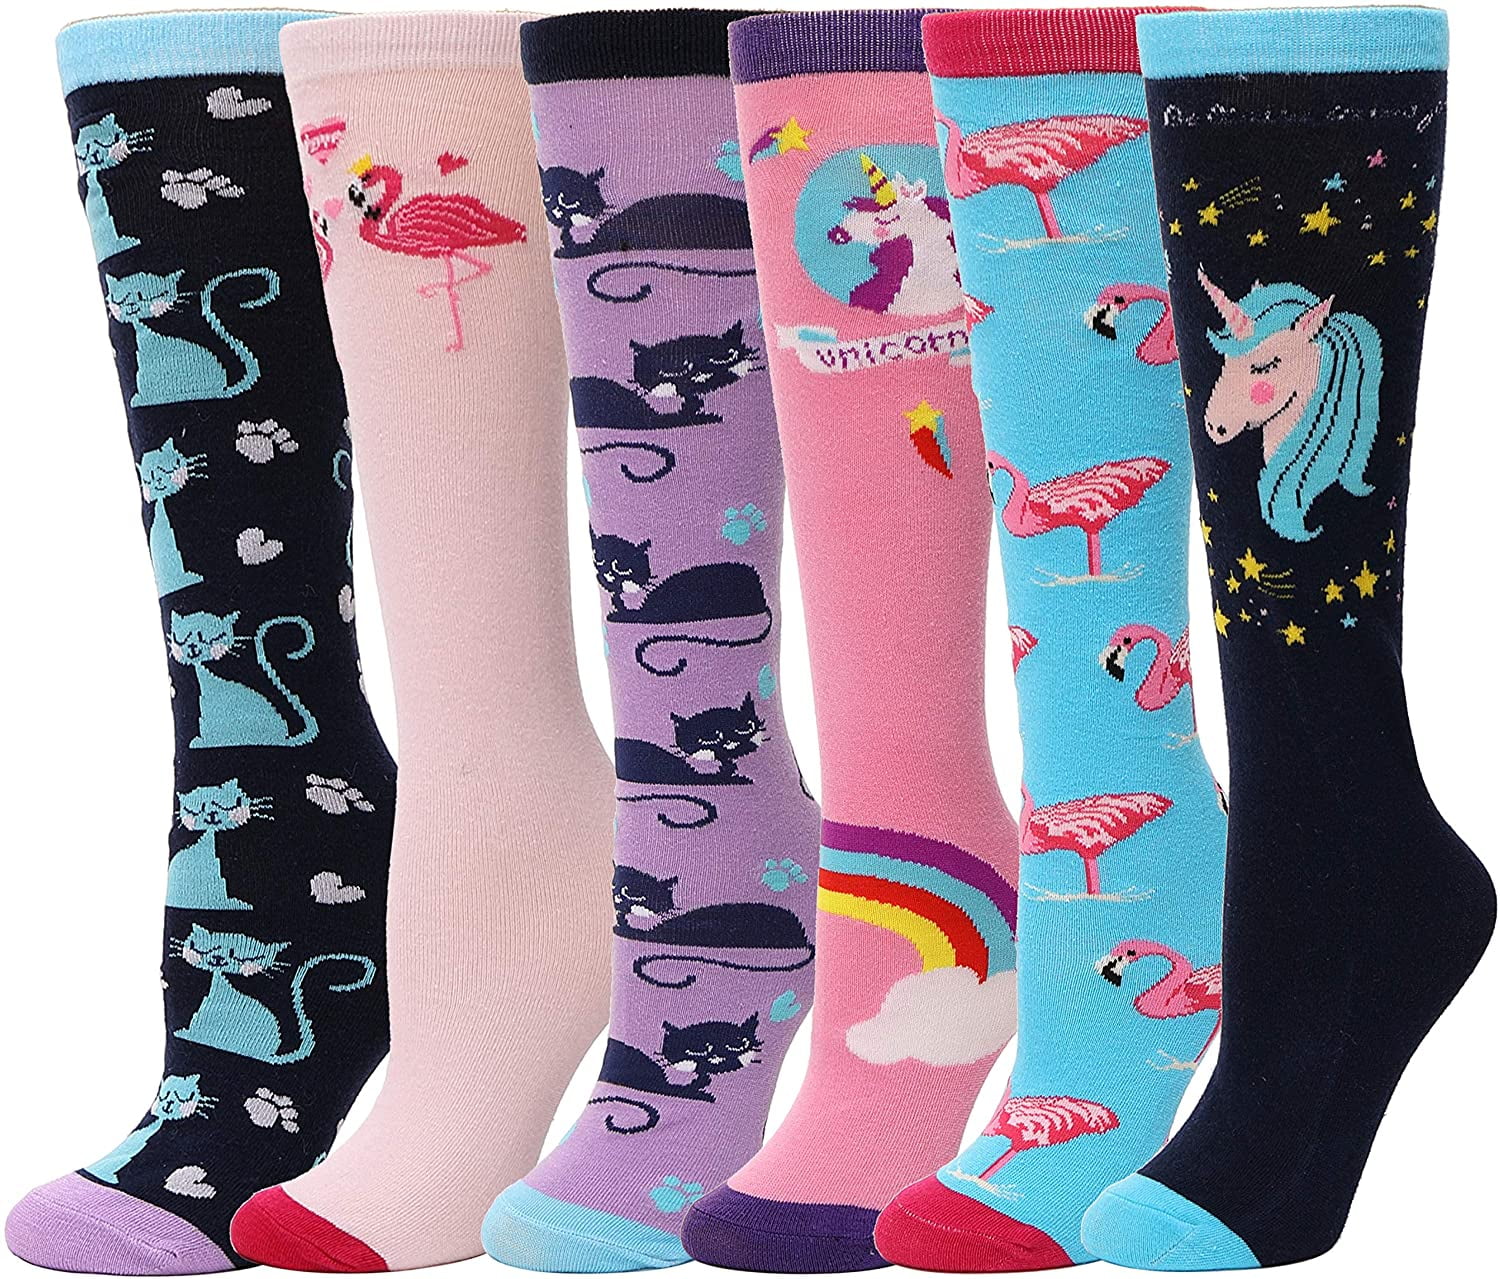 6 Pairs Girls Knee High Socks for Kids Tall Long Fun Crazy Boot Socks Funny Animal Child Cute Socks 